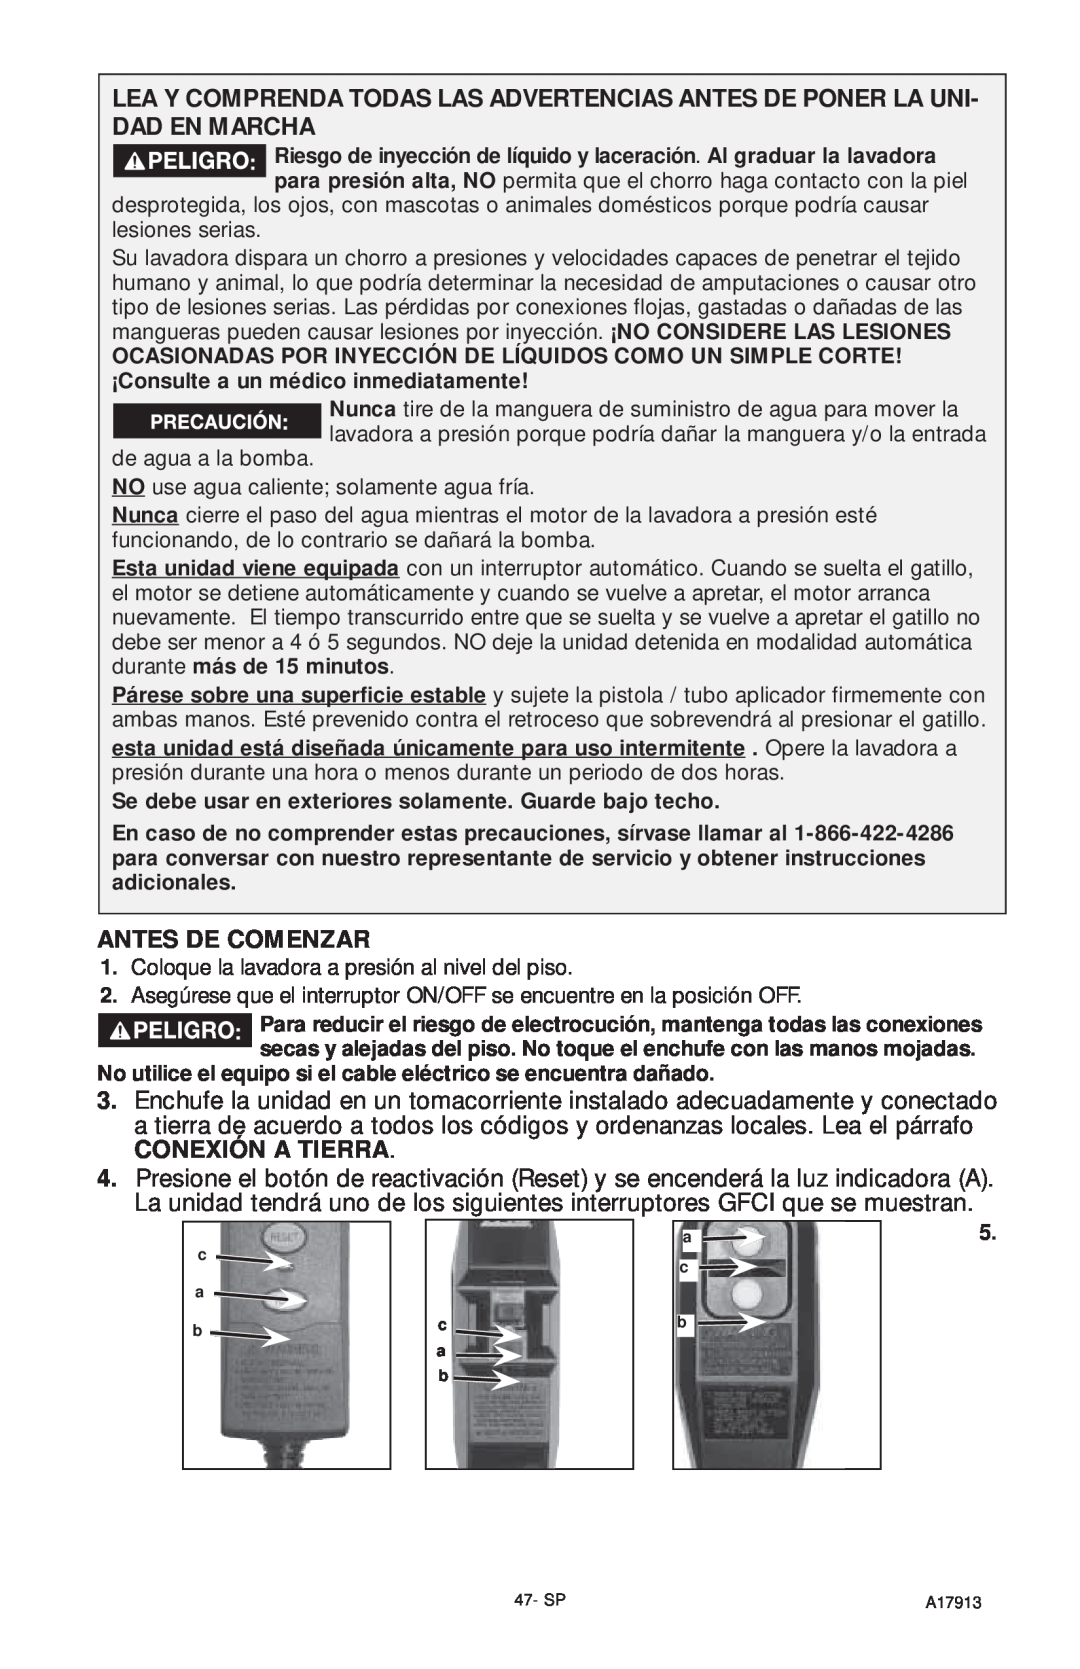 DeVillbiss Air Power Company A17913, VR1600E important safety instructions Antes De Comenzar, Conexión A Tierra 